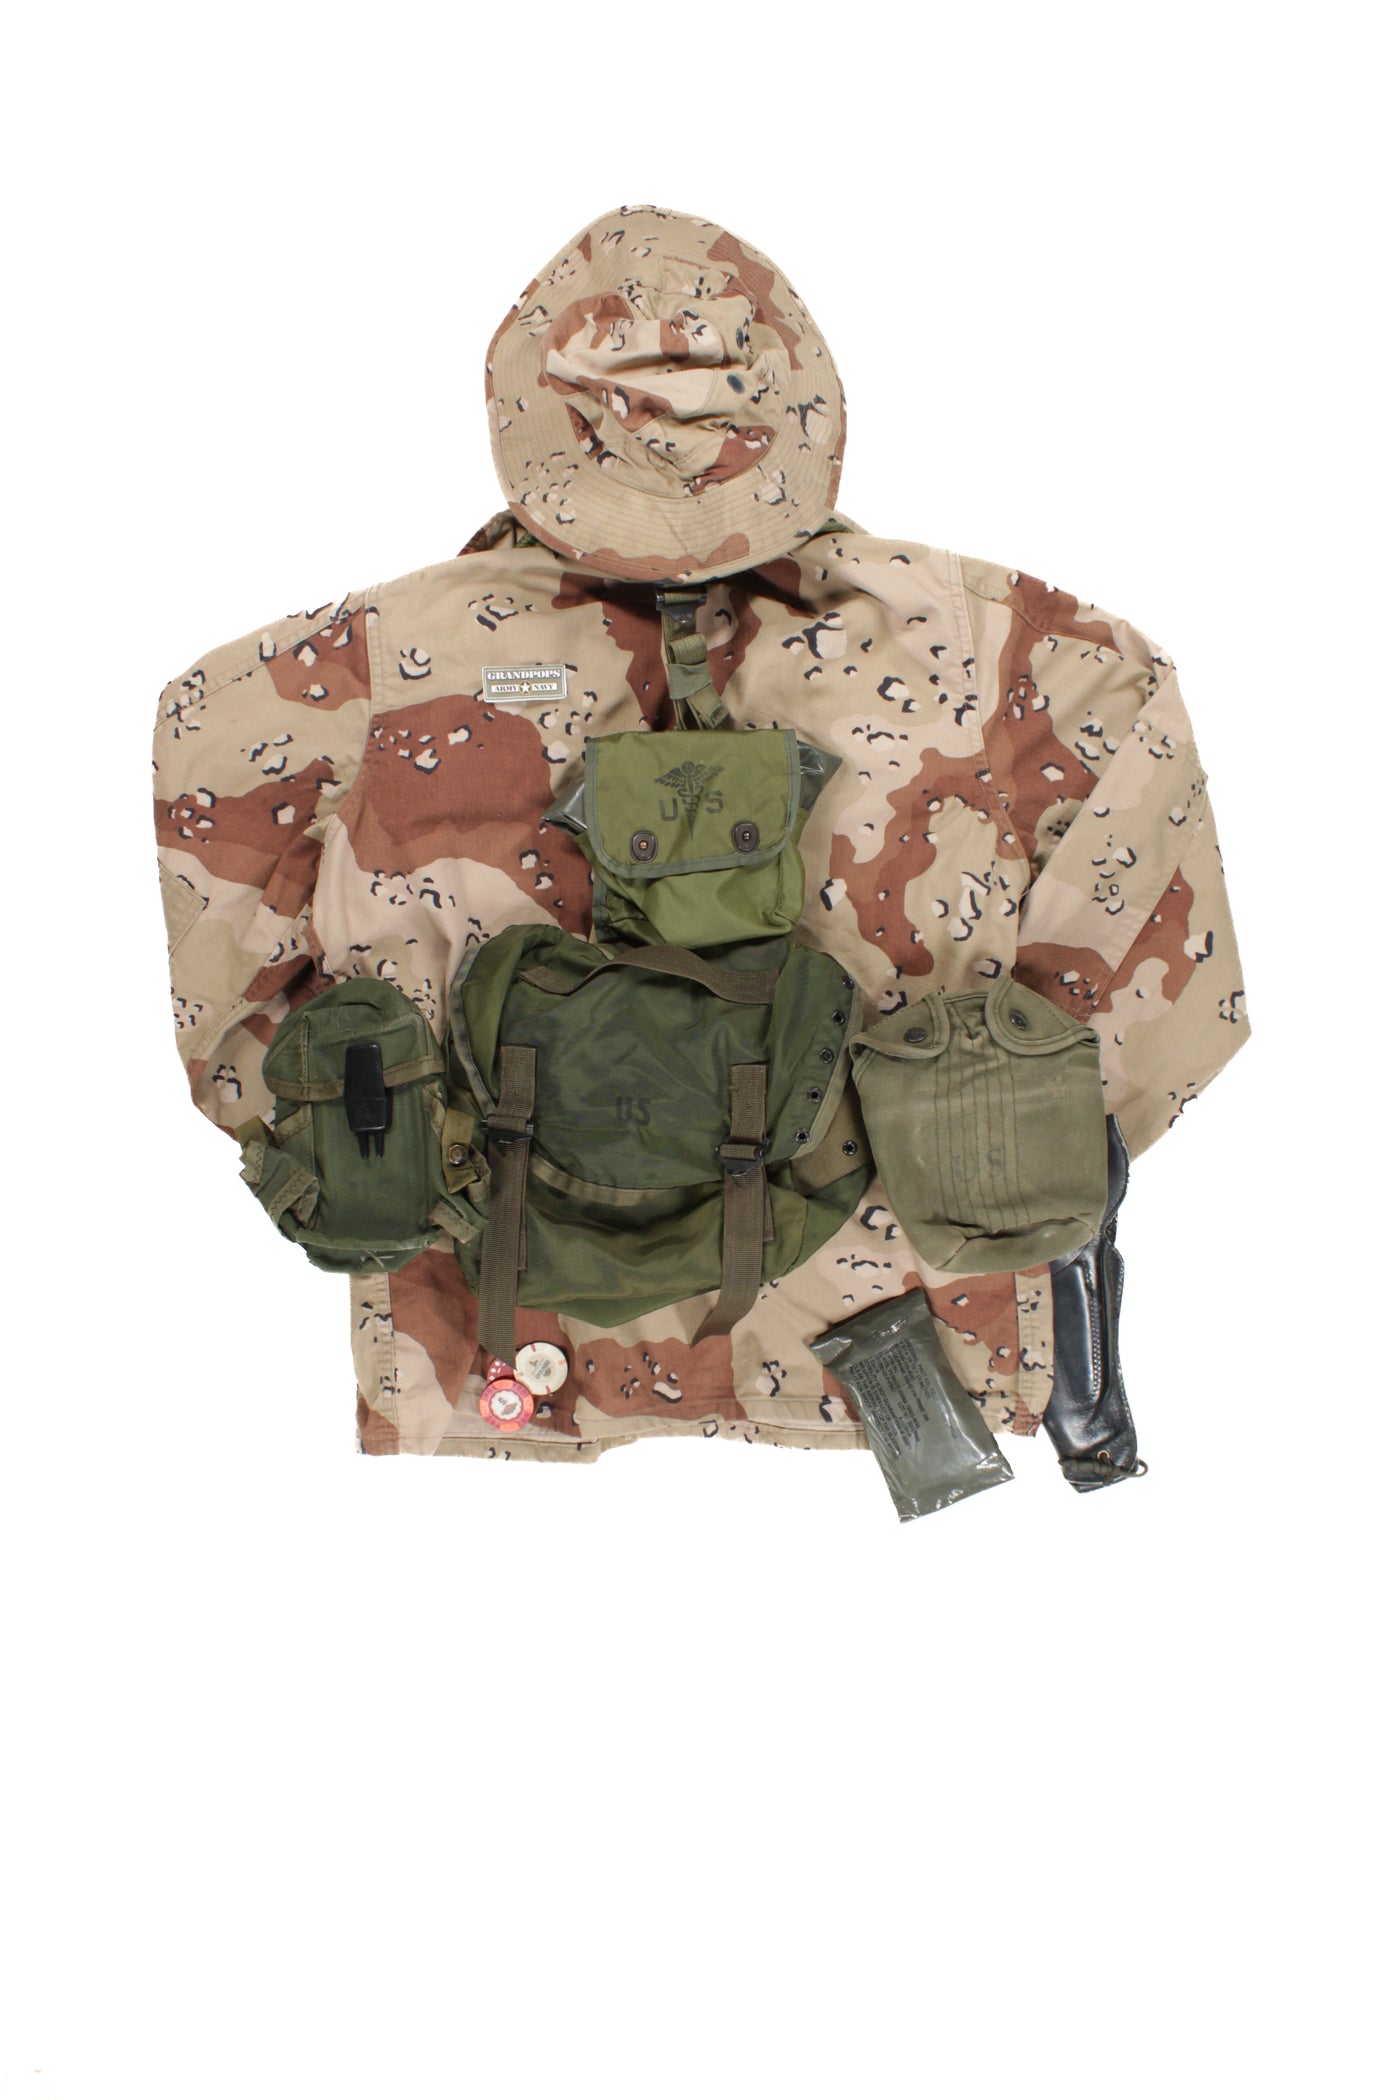 American Desert Camo Vintage Field Jacket 90s Military -  Israel